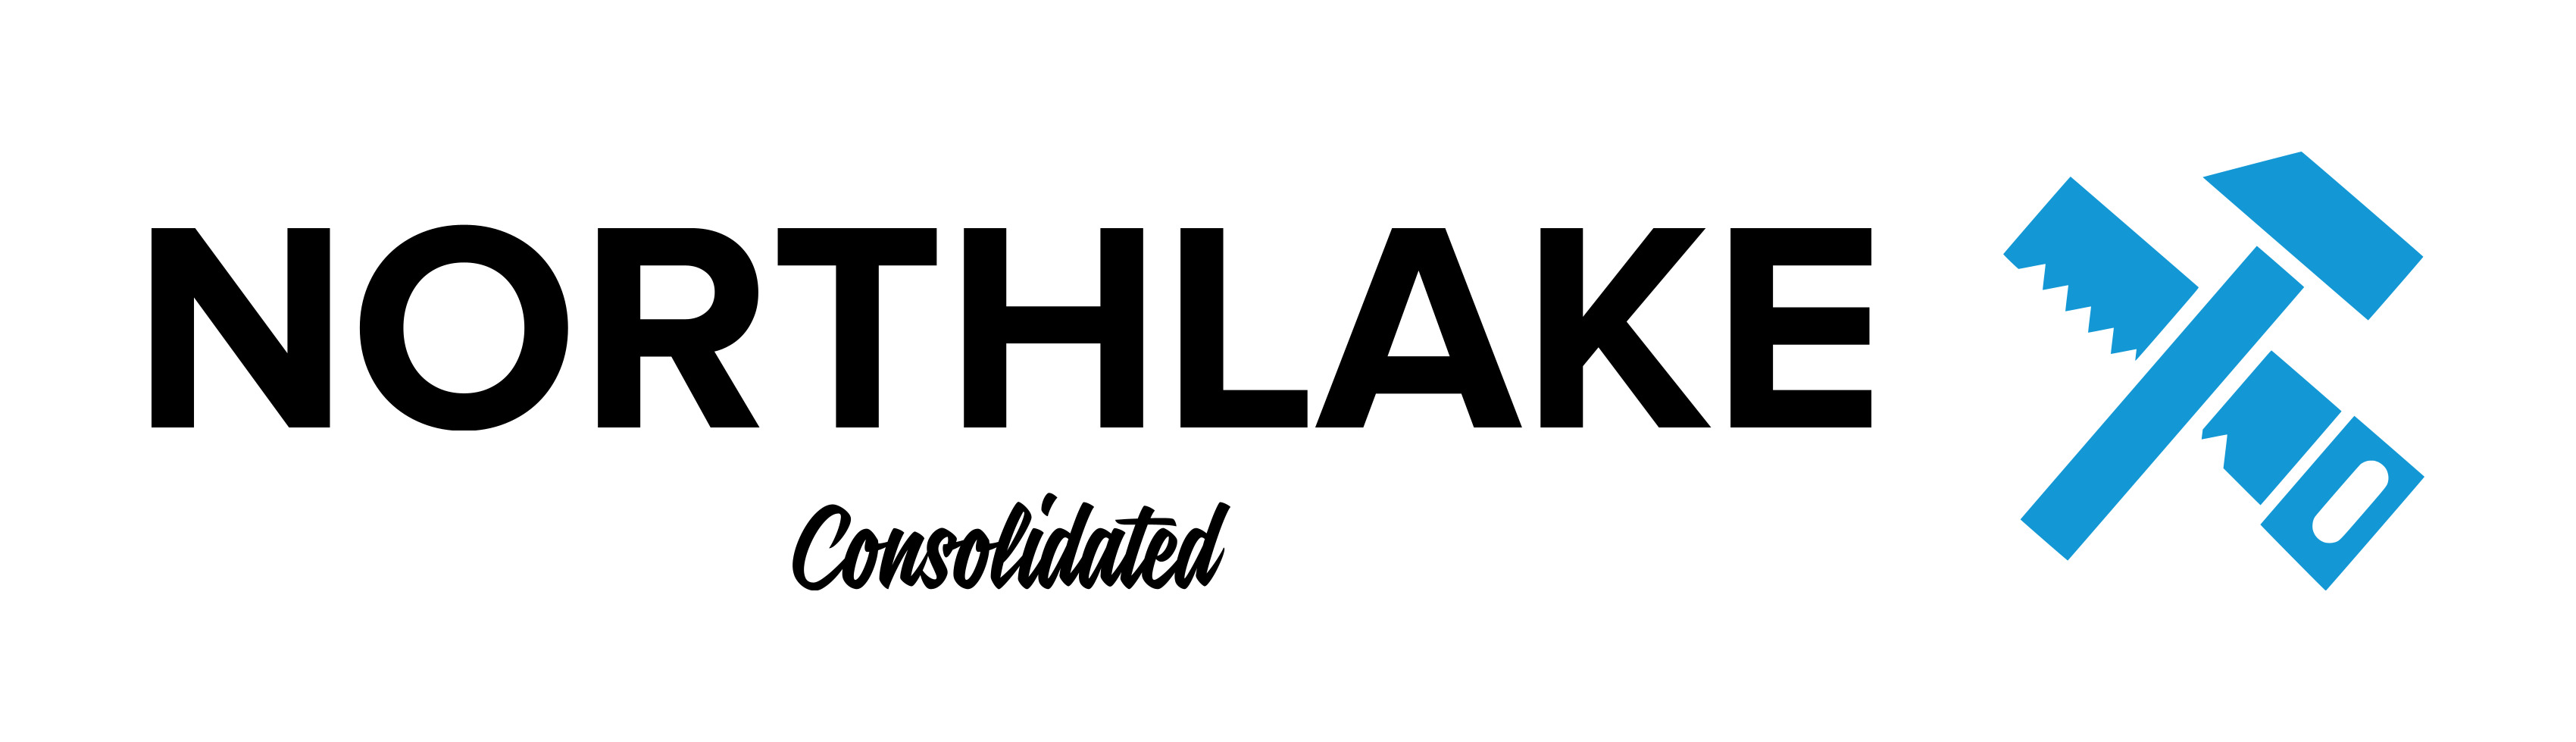 NorthLake Consolidated, LLC Logo